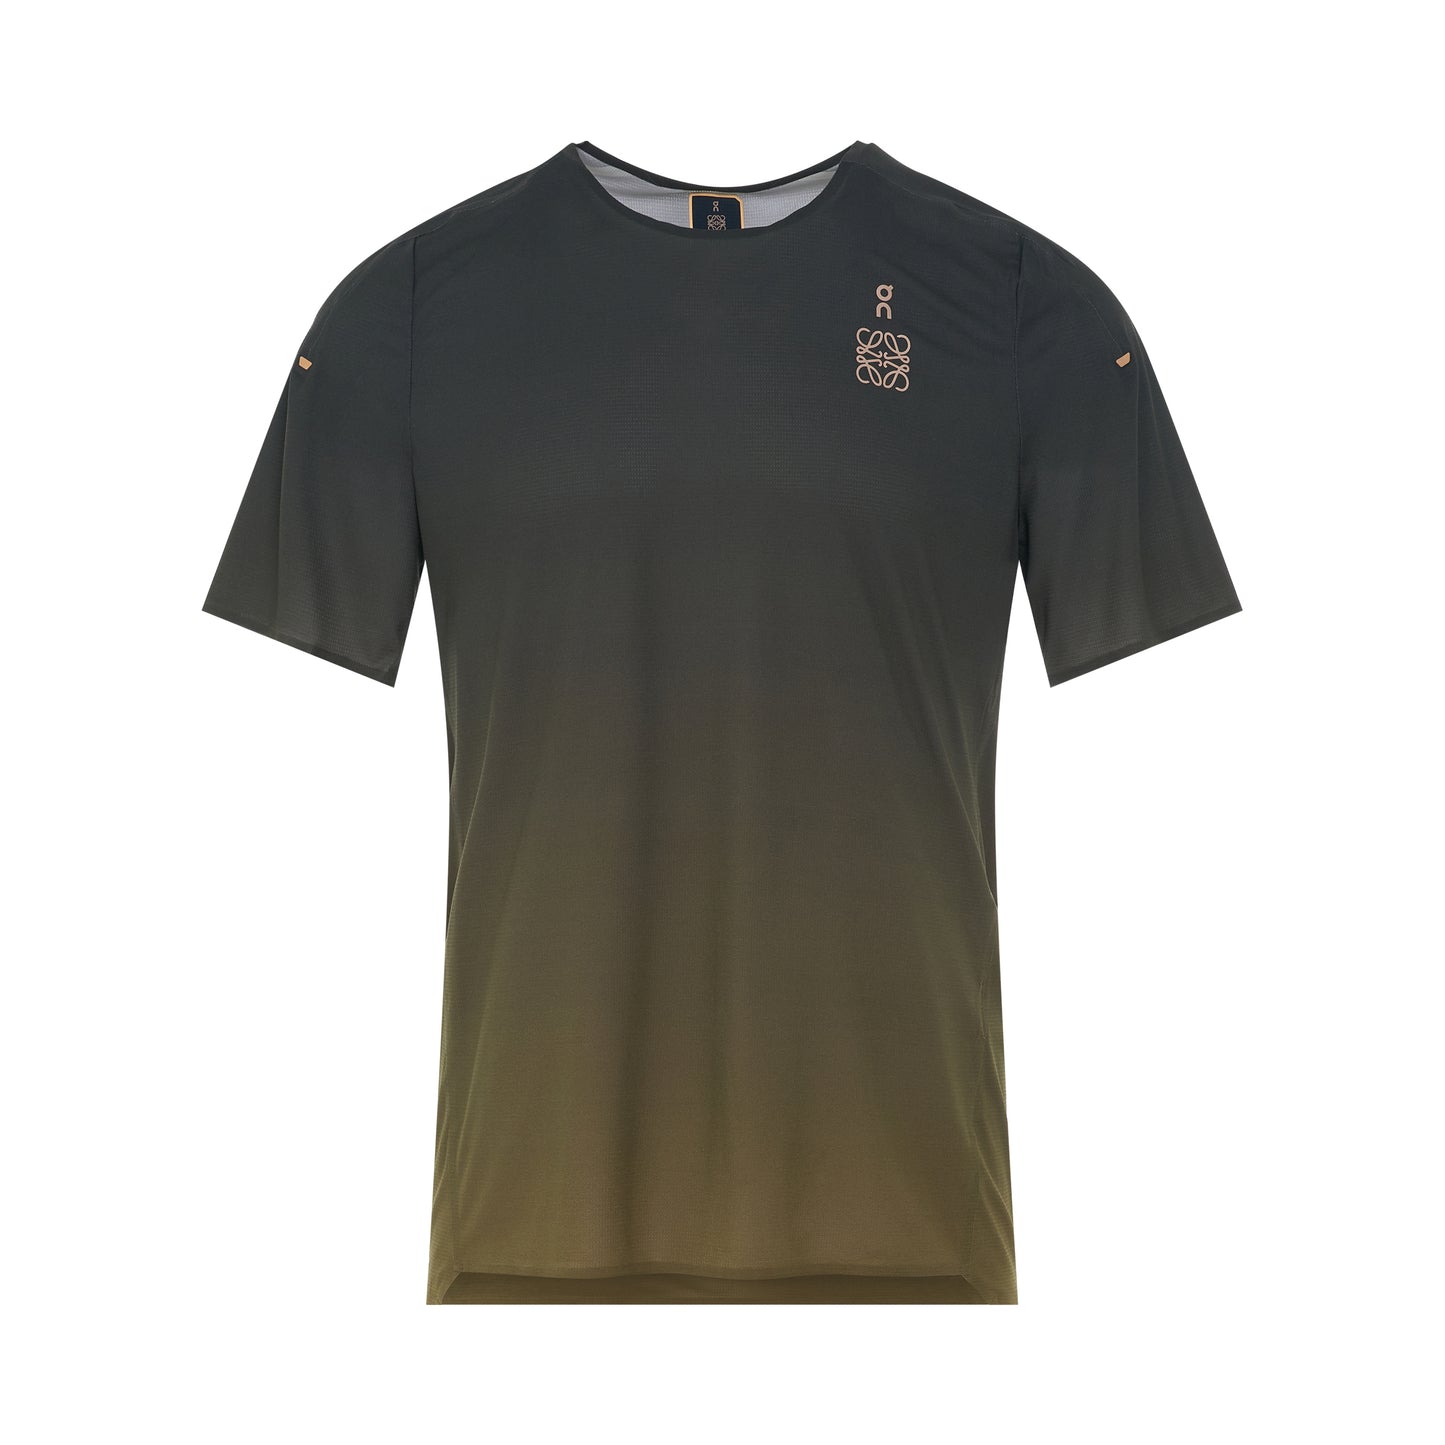 Loewe x ON Performance T-Shirt in Gradient Khaki